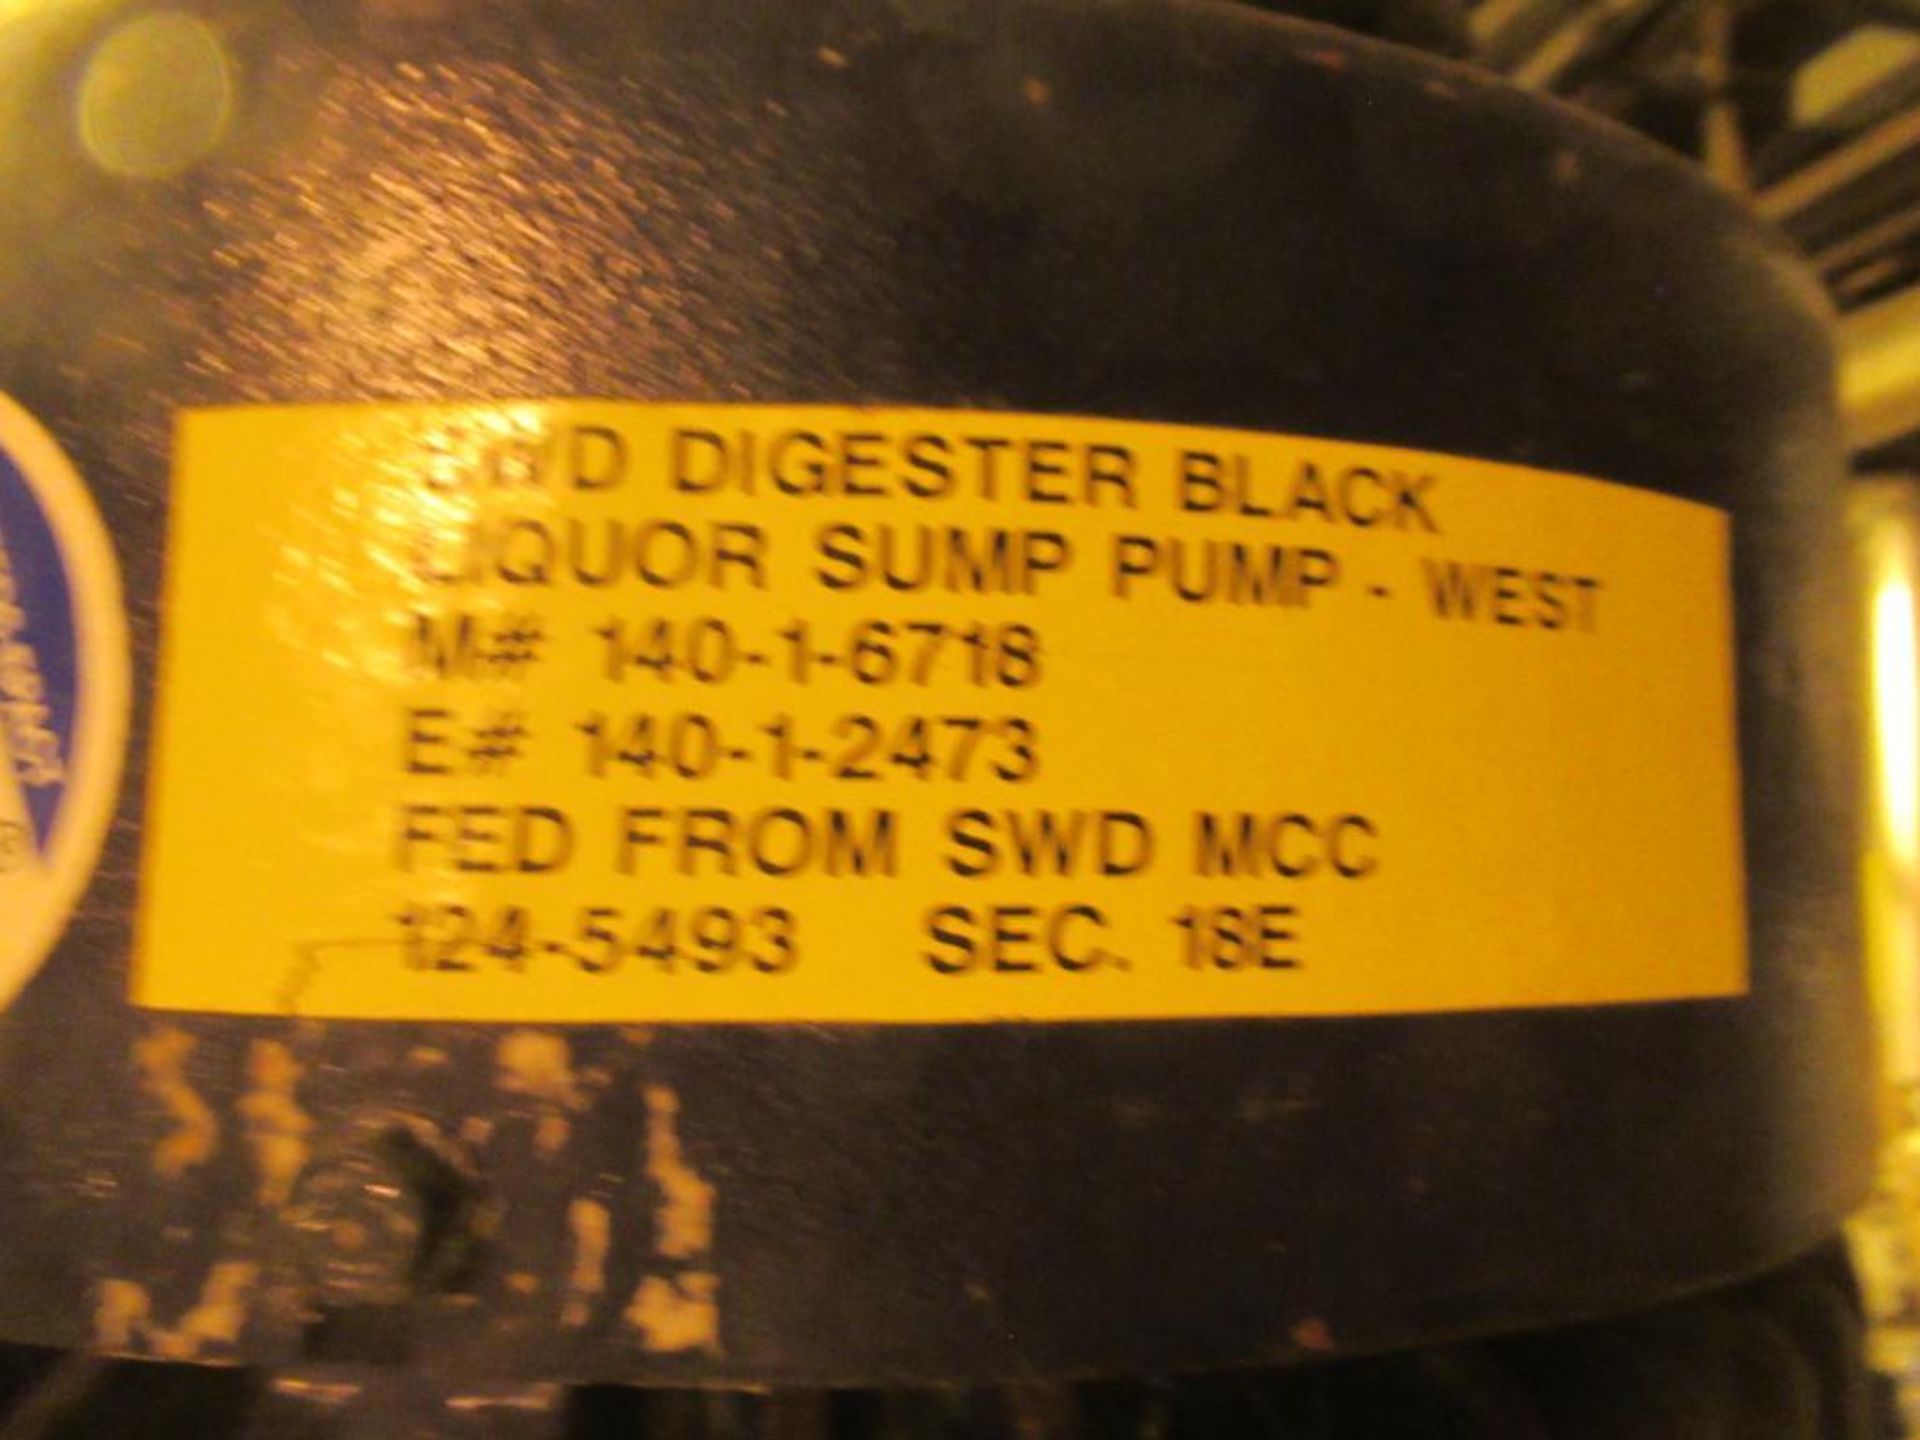 SWD Digester Black Liq. Sump Pumps - Image 2 of 3